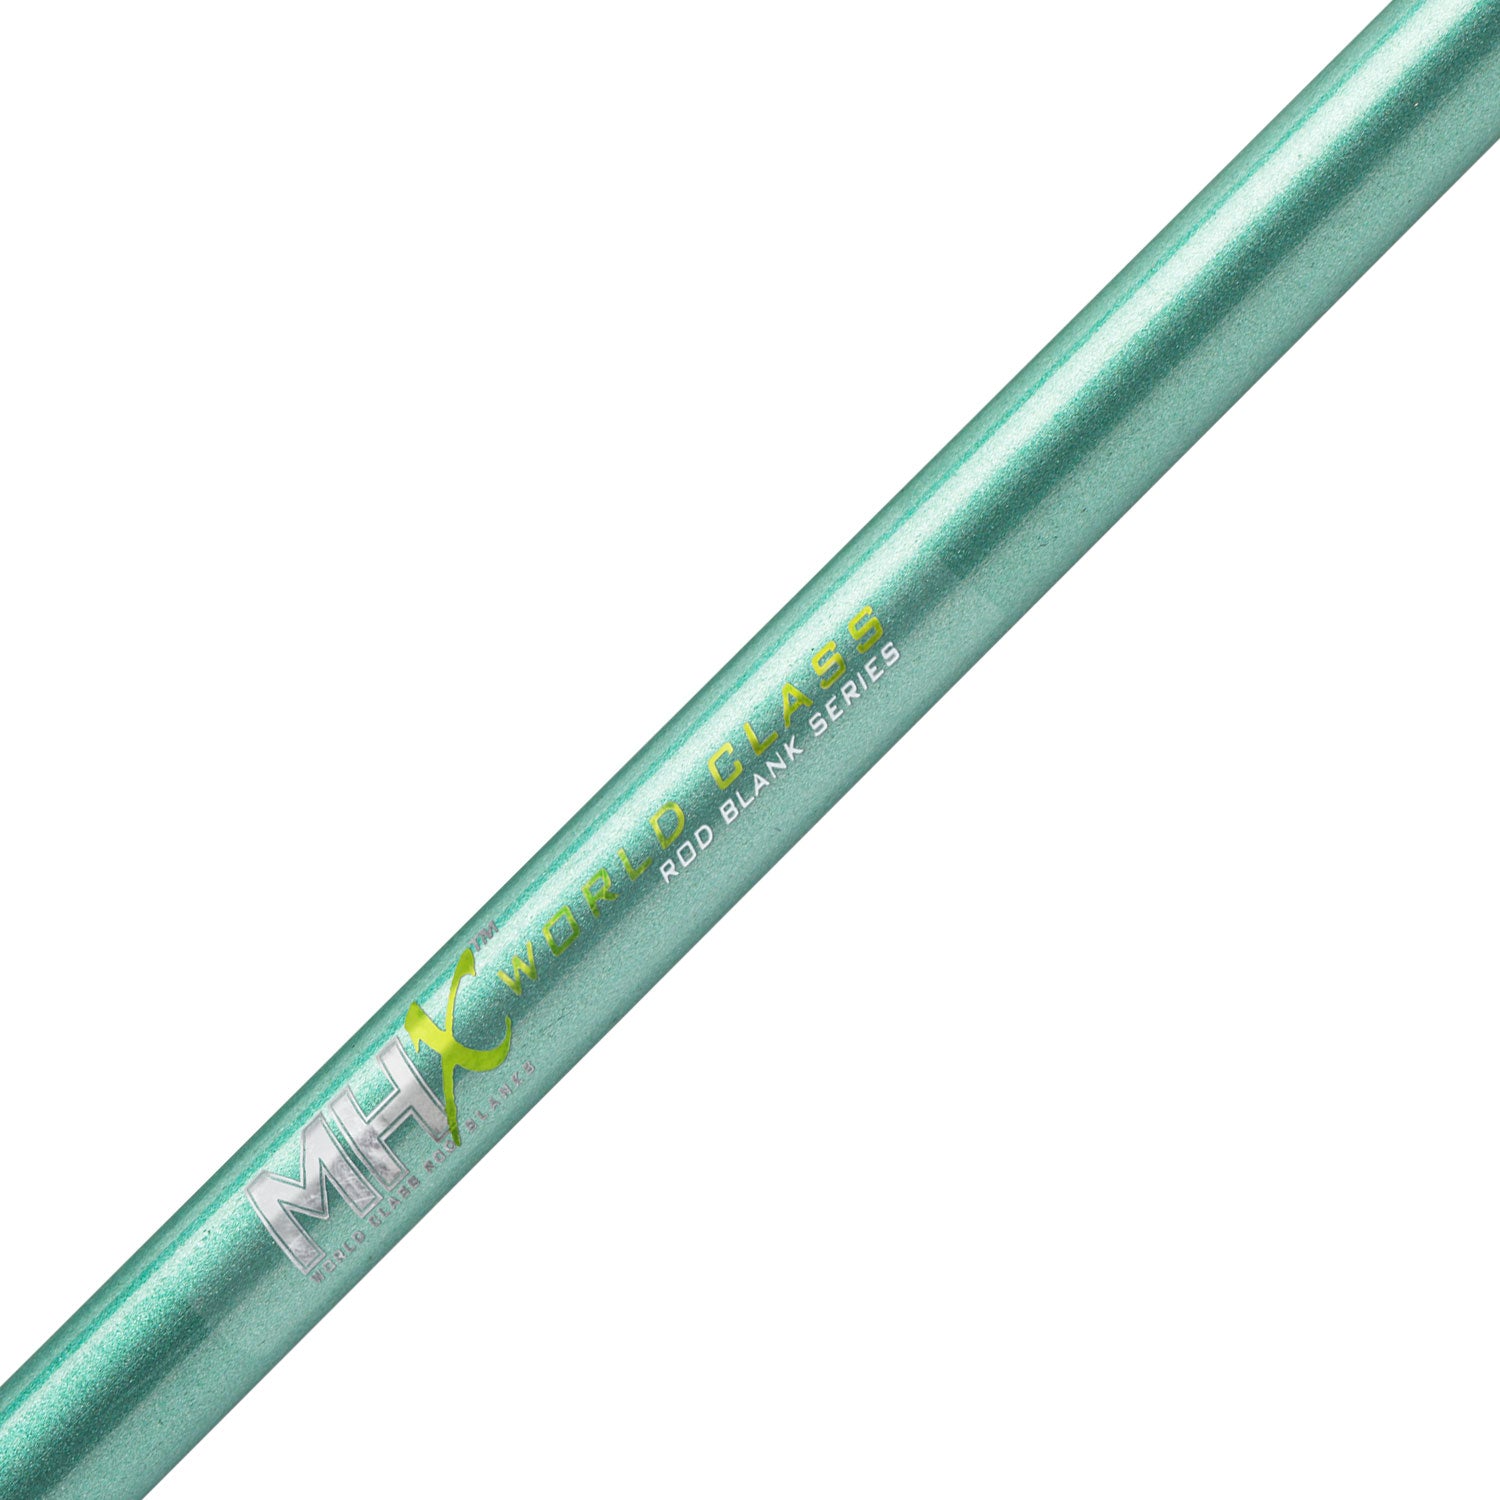 MHX 7'0 Medium Light Saltwater Rod Blank - L843